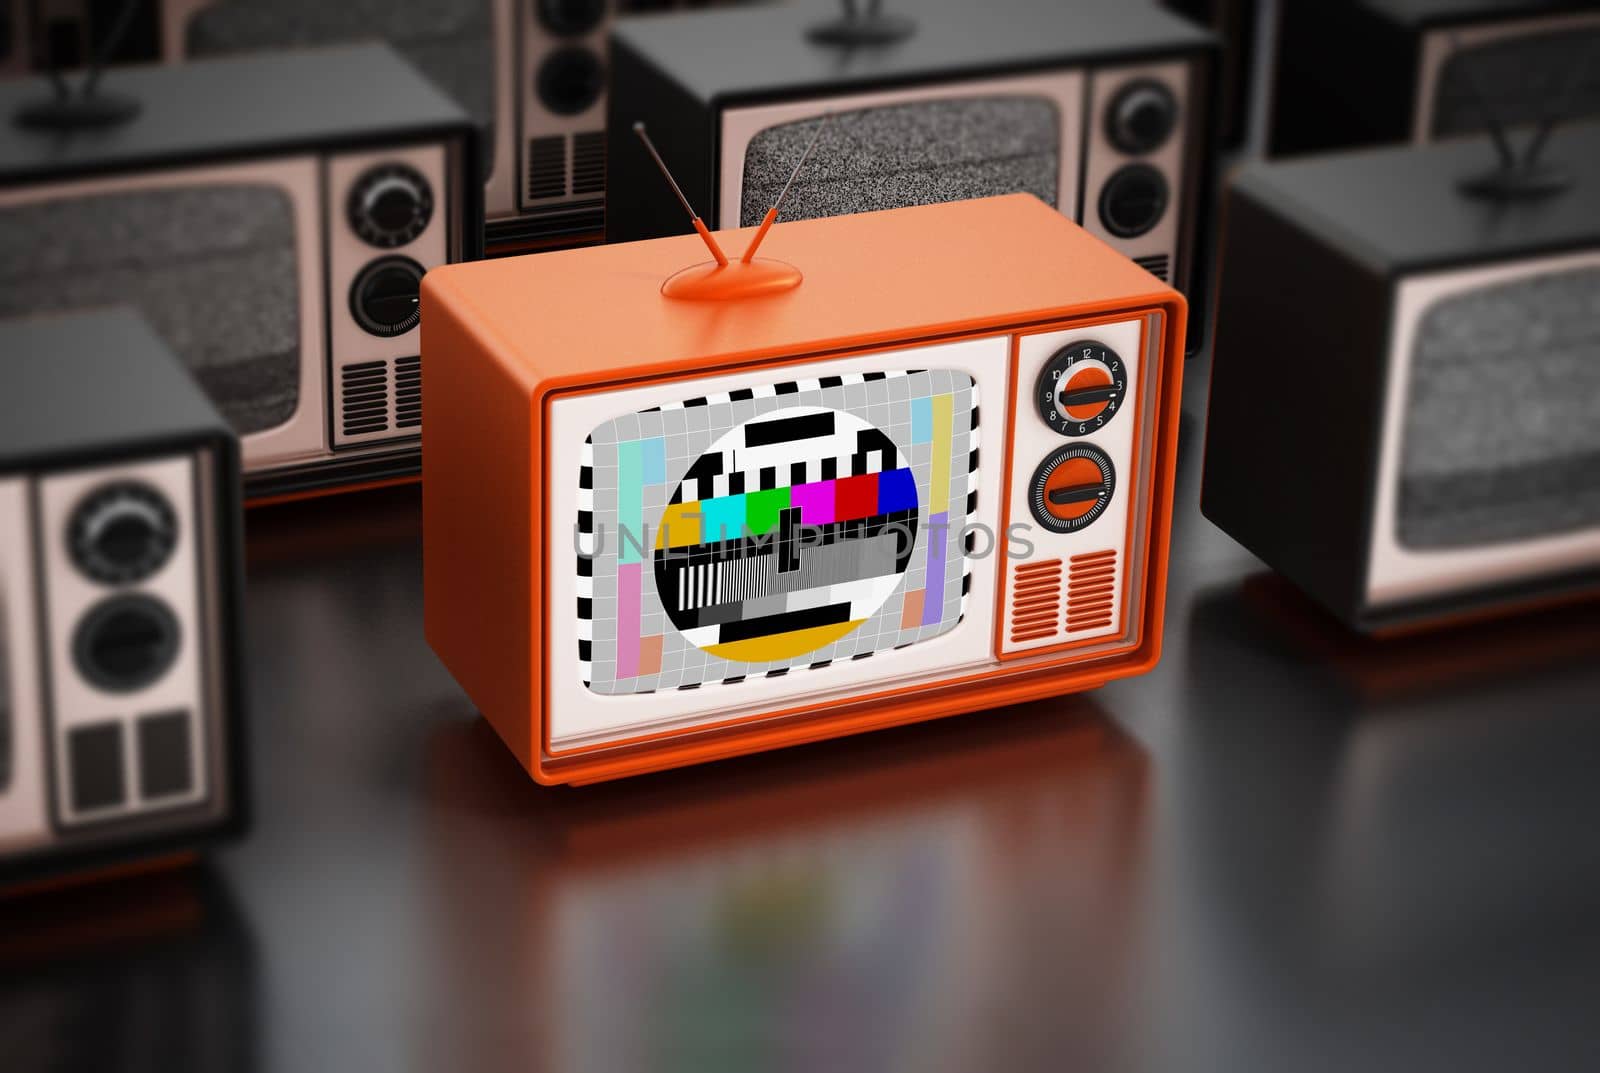 Retro orange TV with test screen. 3D illustration by Simsek